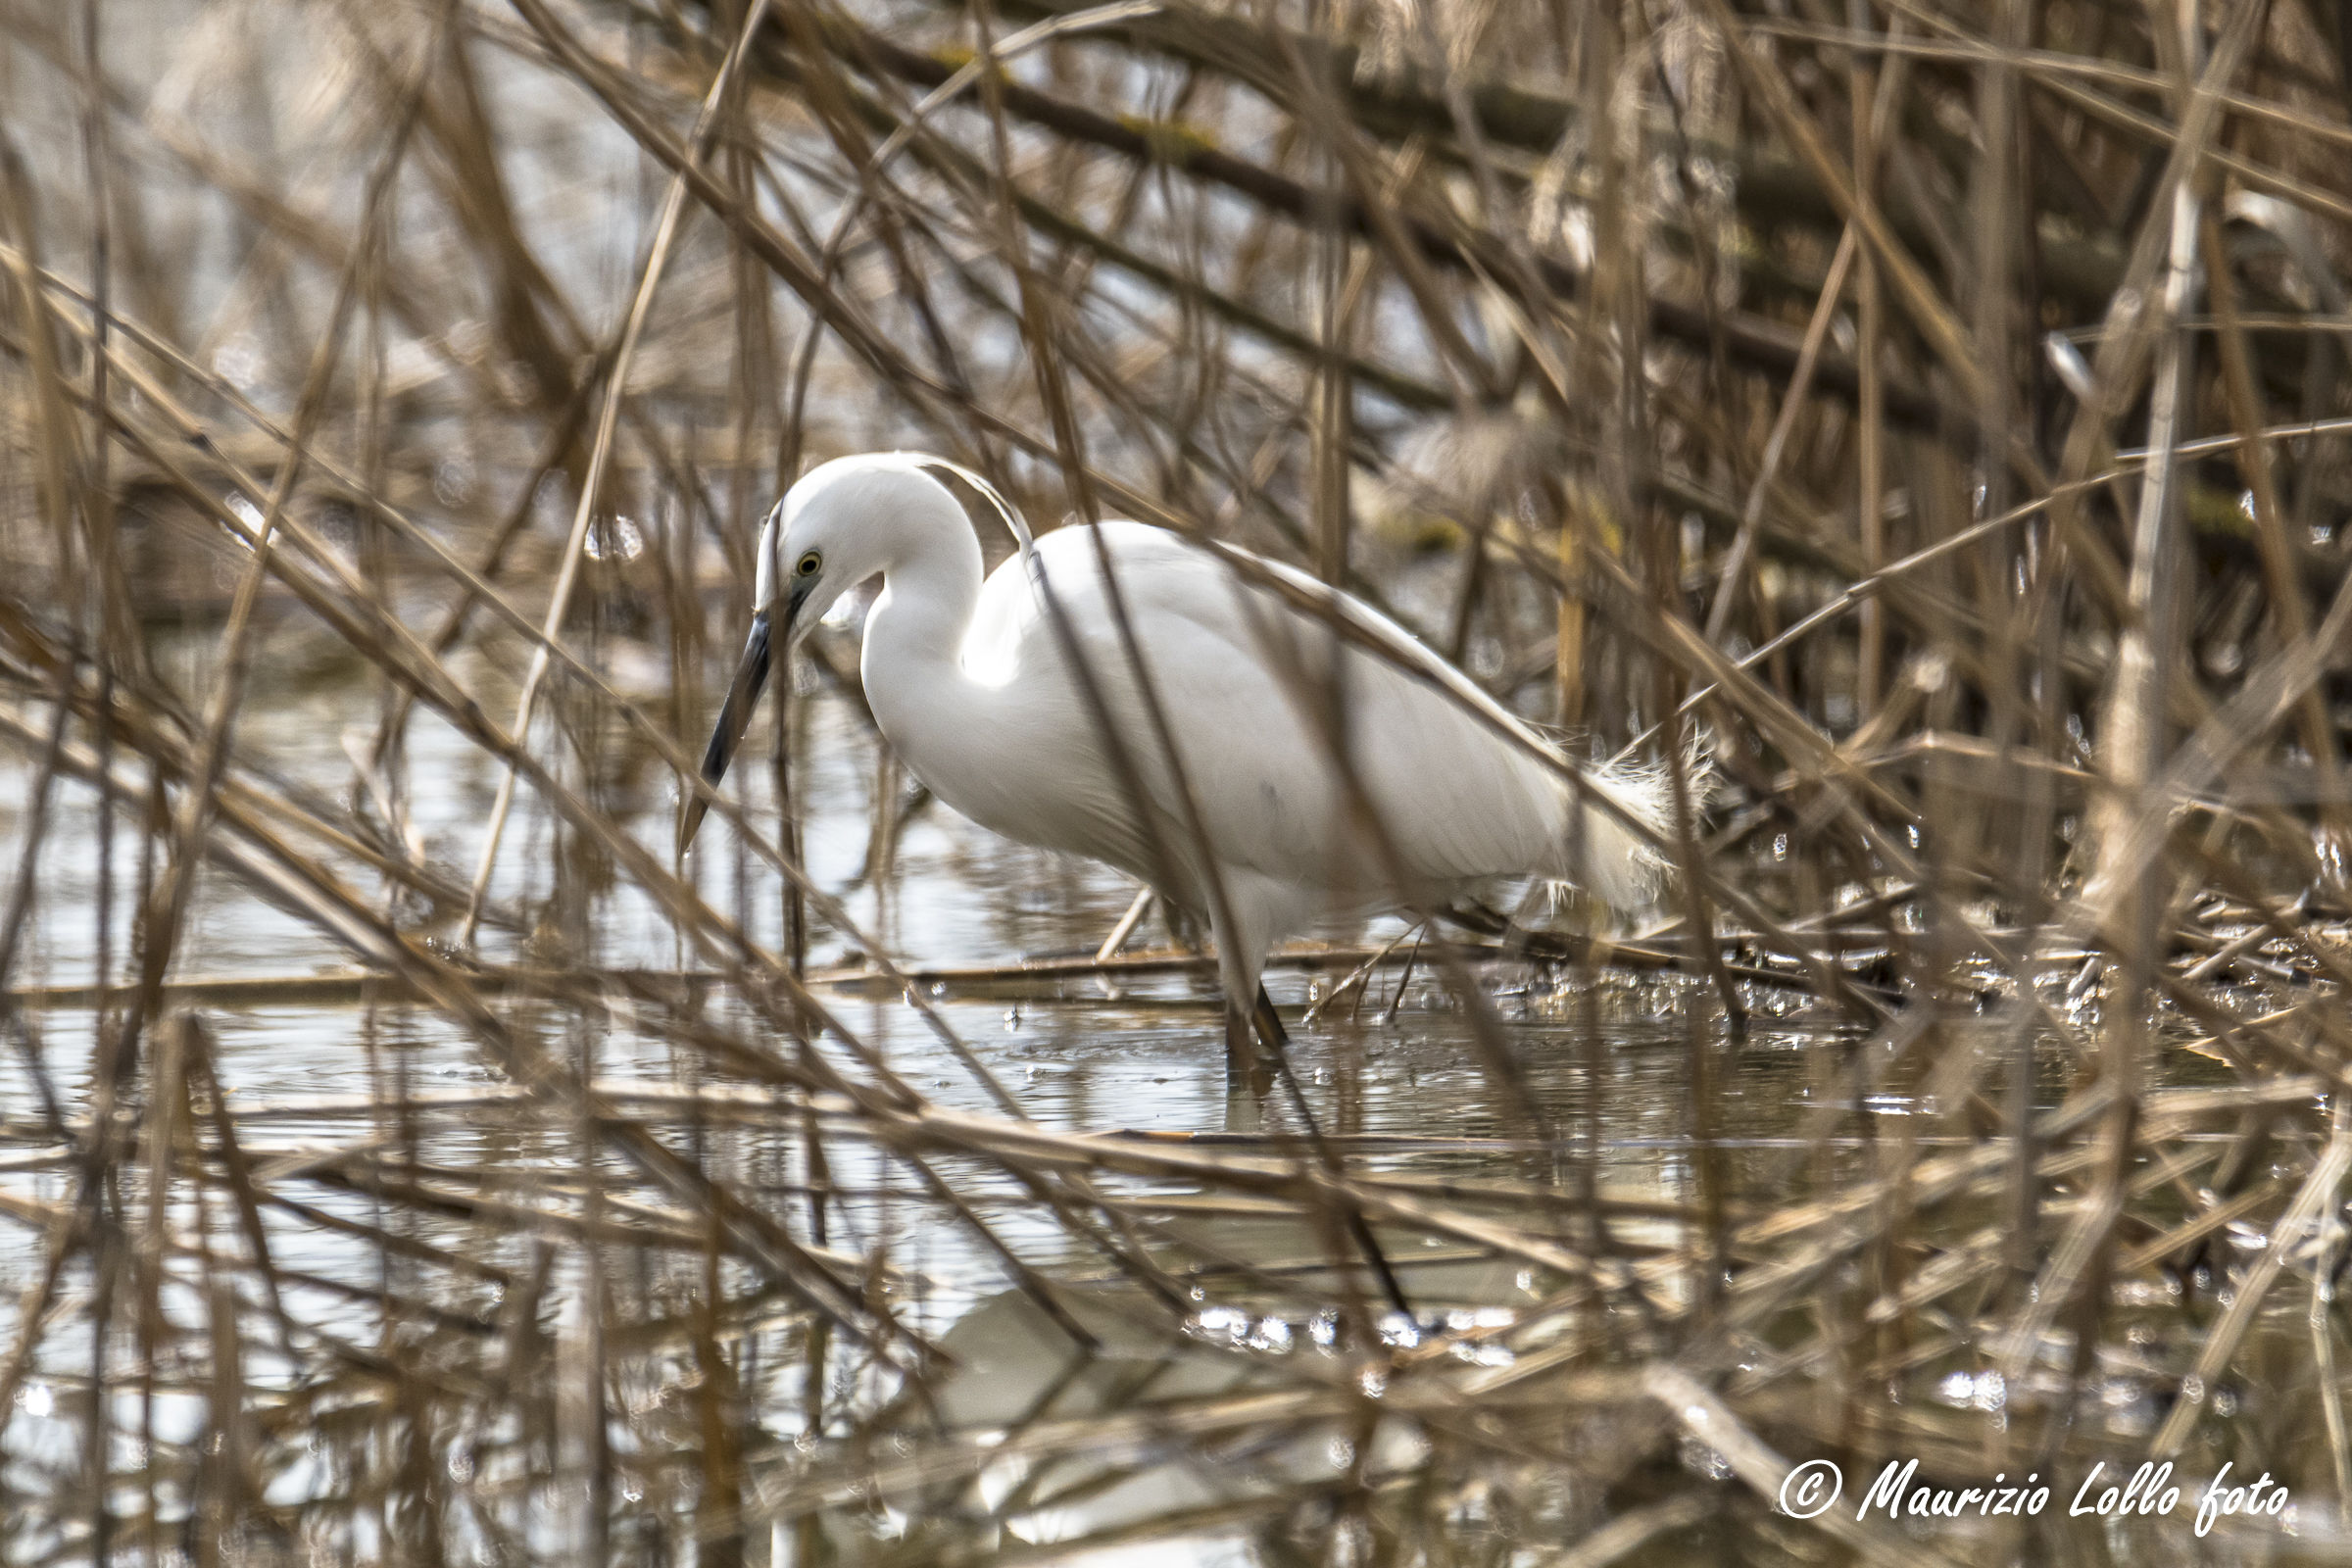 Timidona little egret...